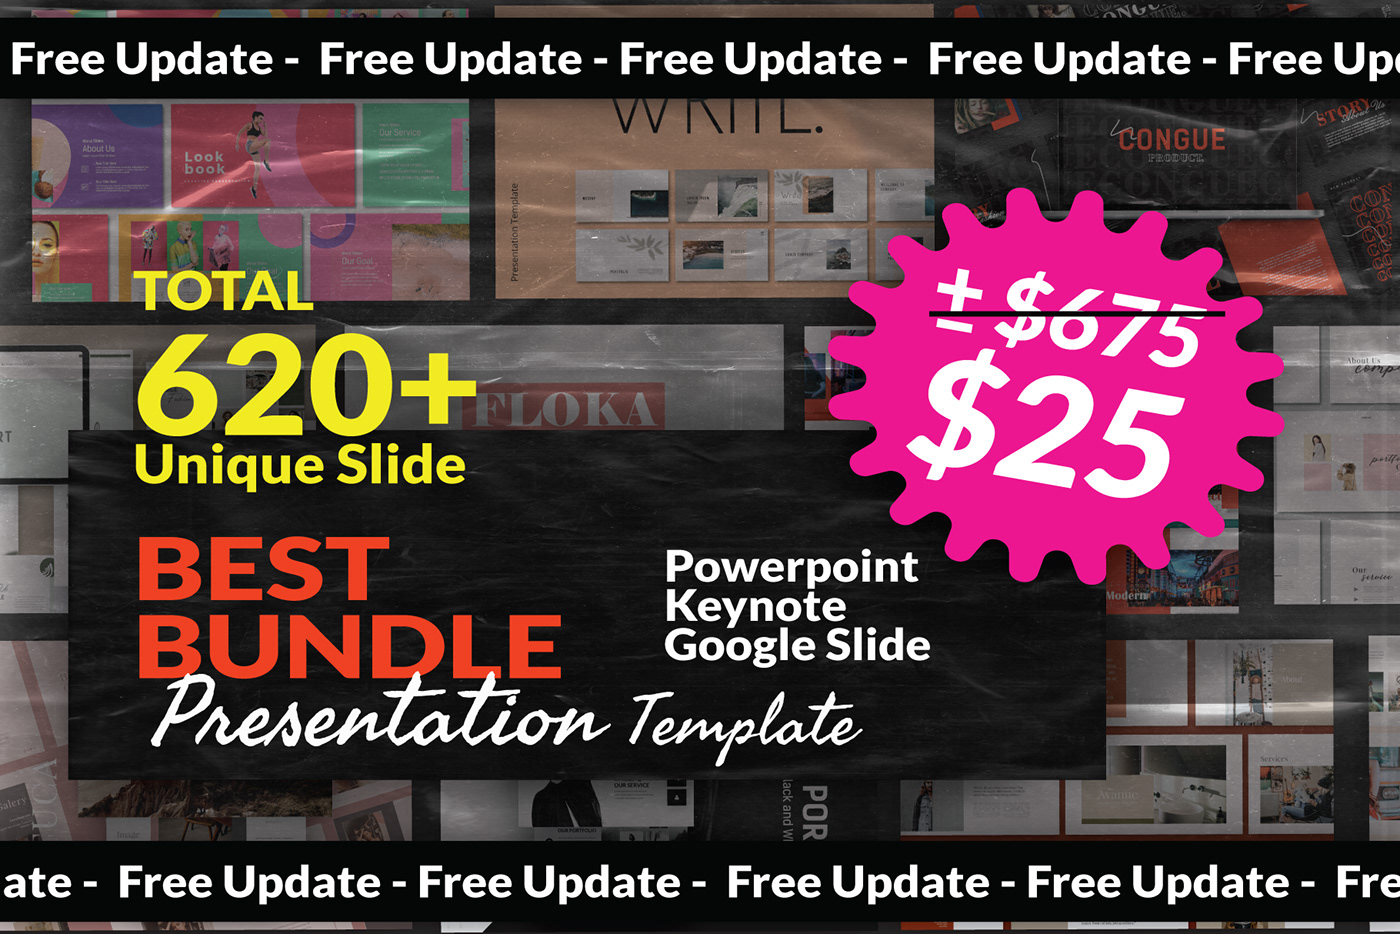 bundle powerpoint bundle presentation creative market google slide Keynote Powerpoint